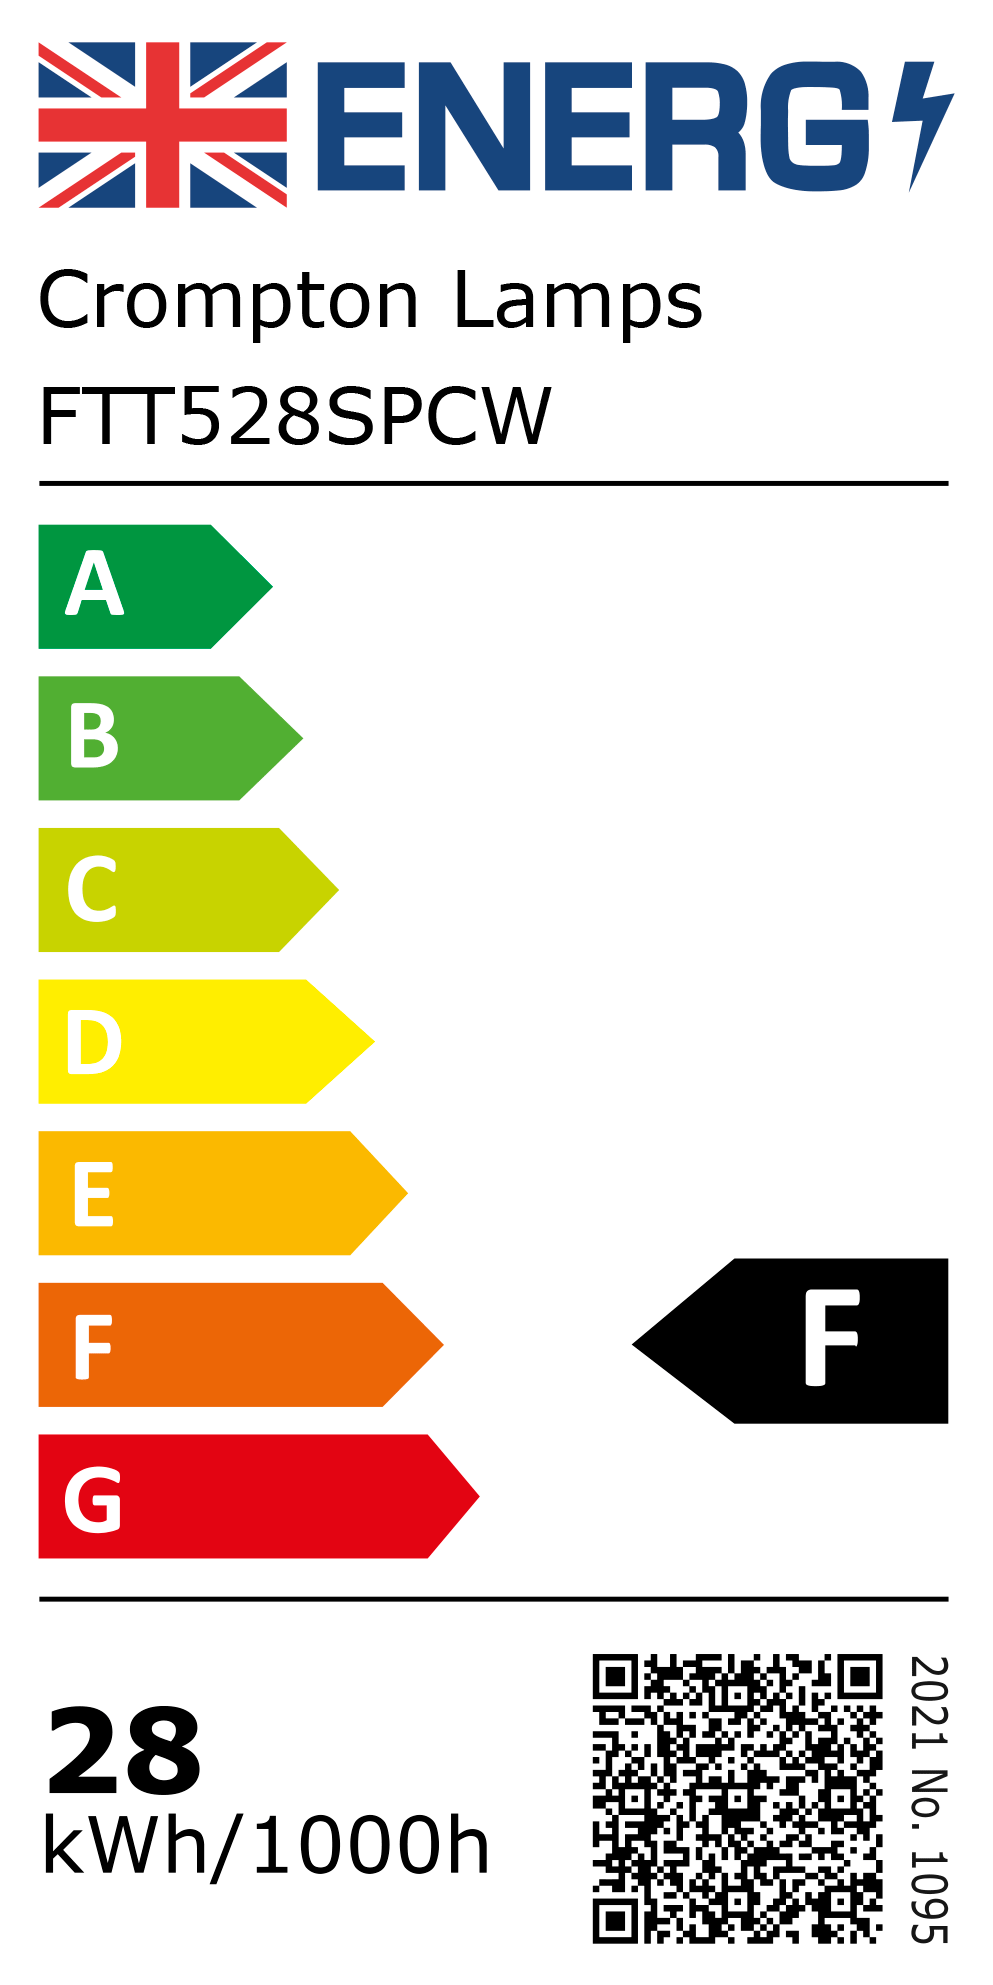 New 2021 Energy Rating Label: Stock Code FTT528SPCW